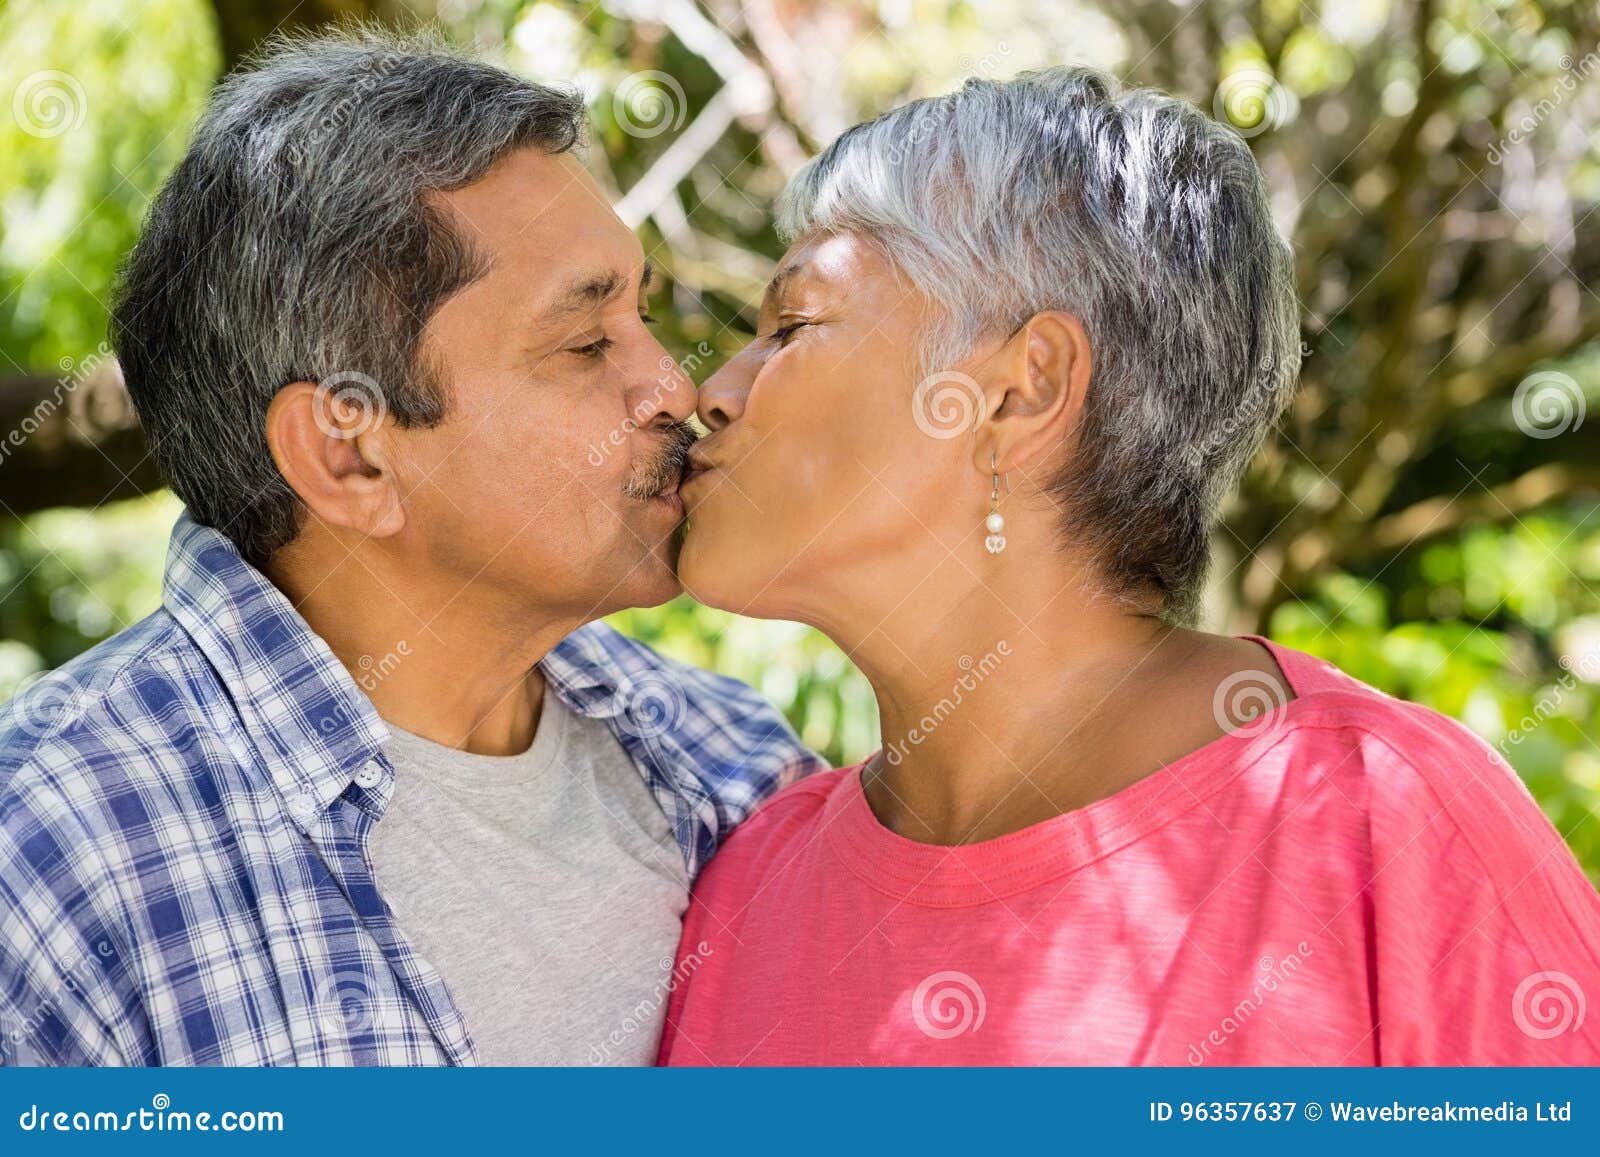 Senior Couple Kissing Each Other In Garden Stock Image